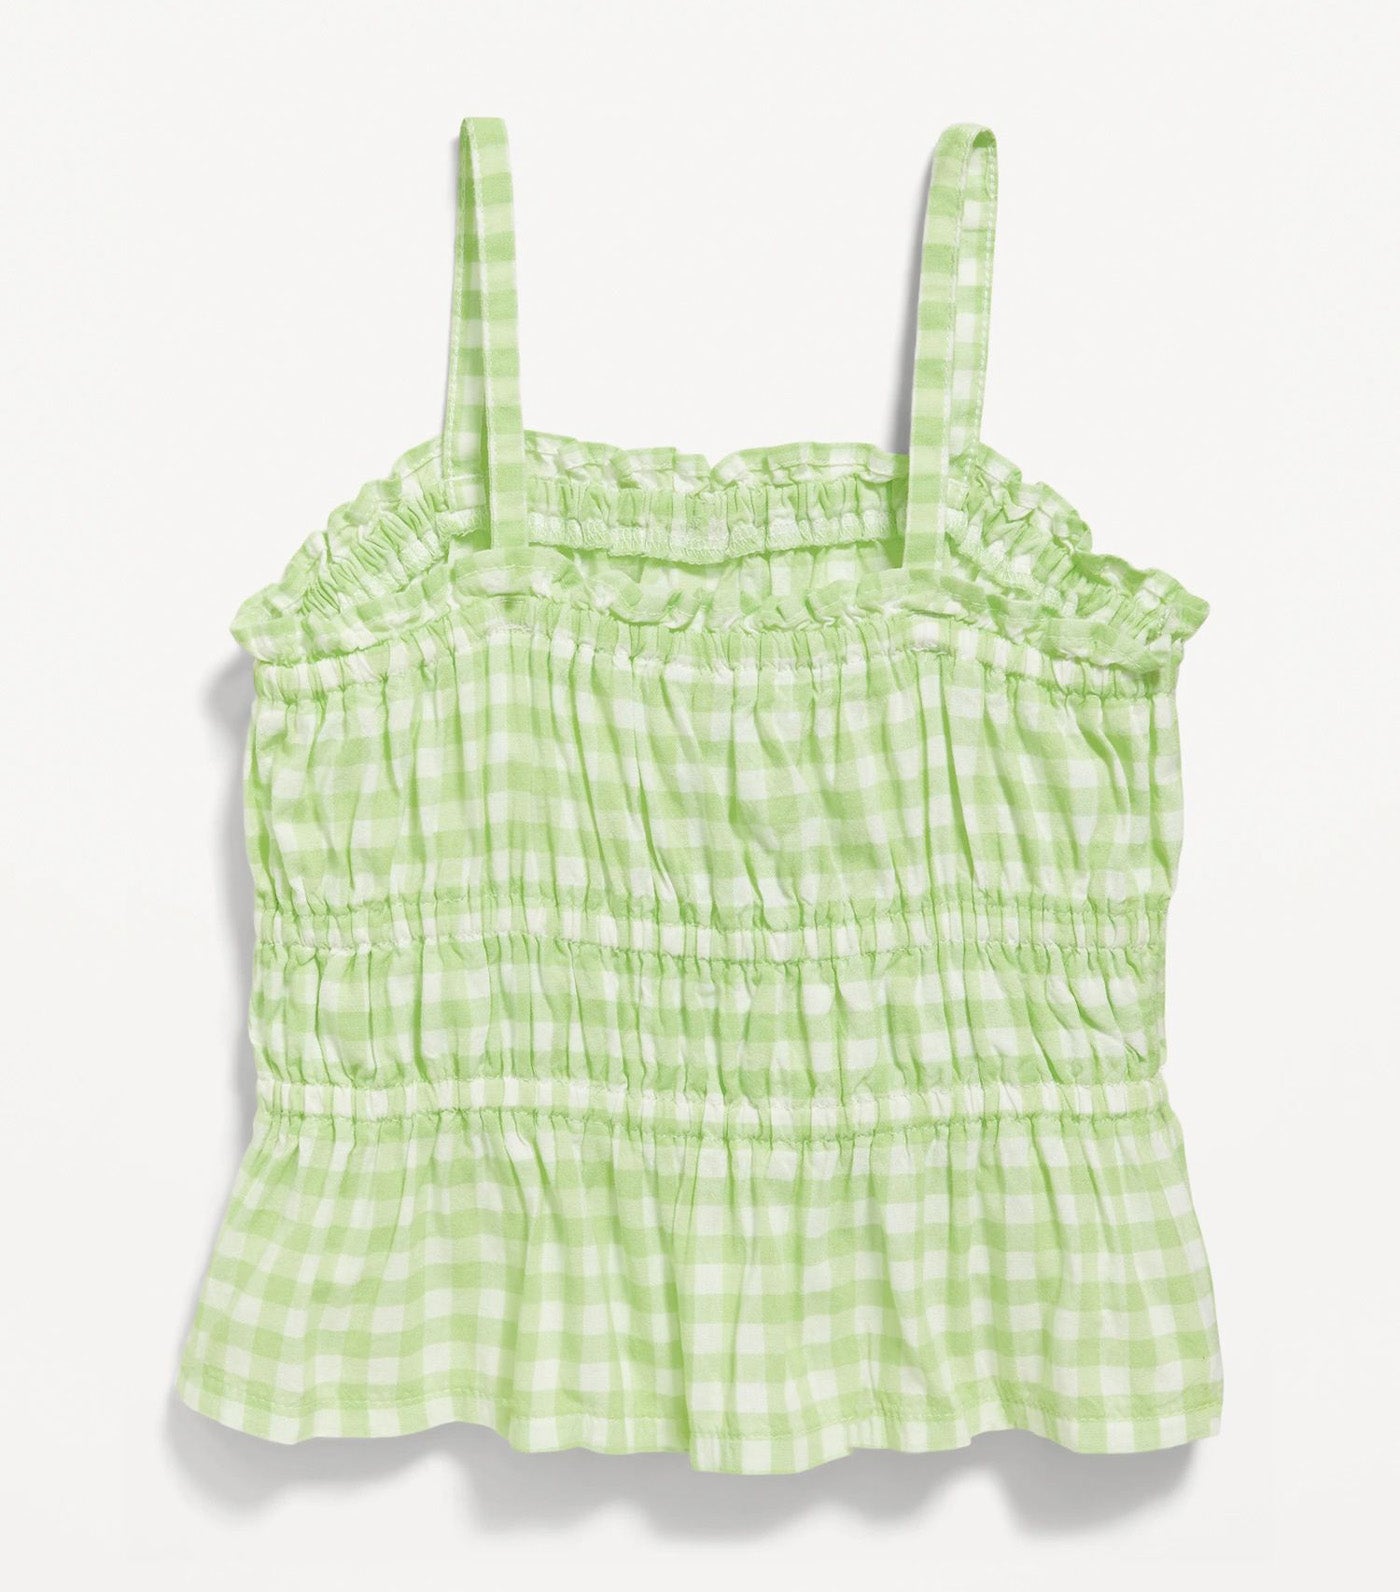 Printed Sleeveless Smocked Peplum Top for Toddler Girls - Green Gingham